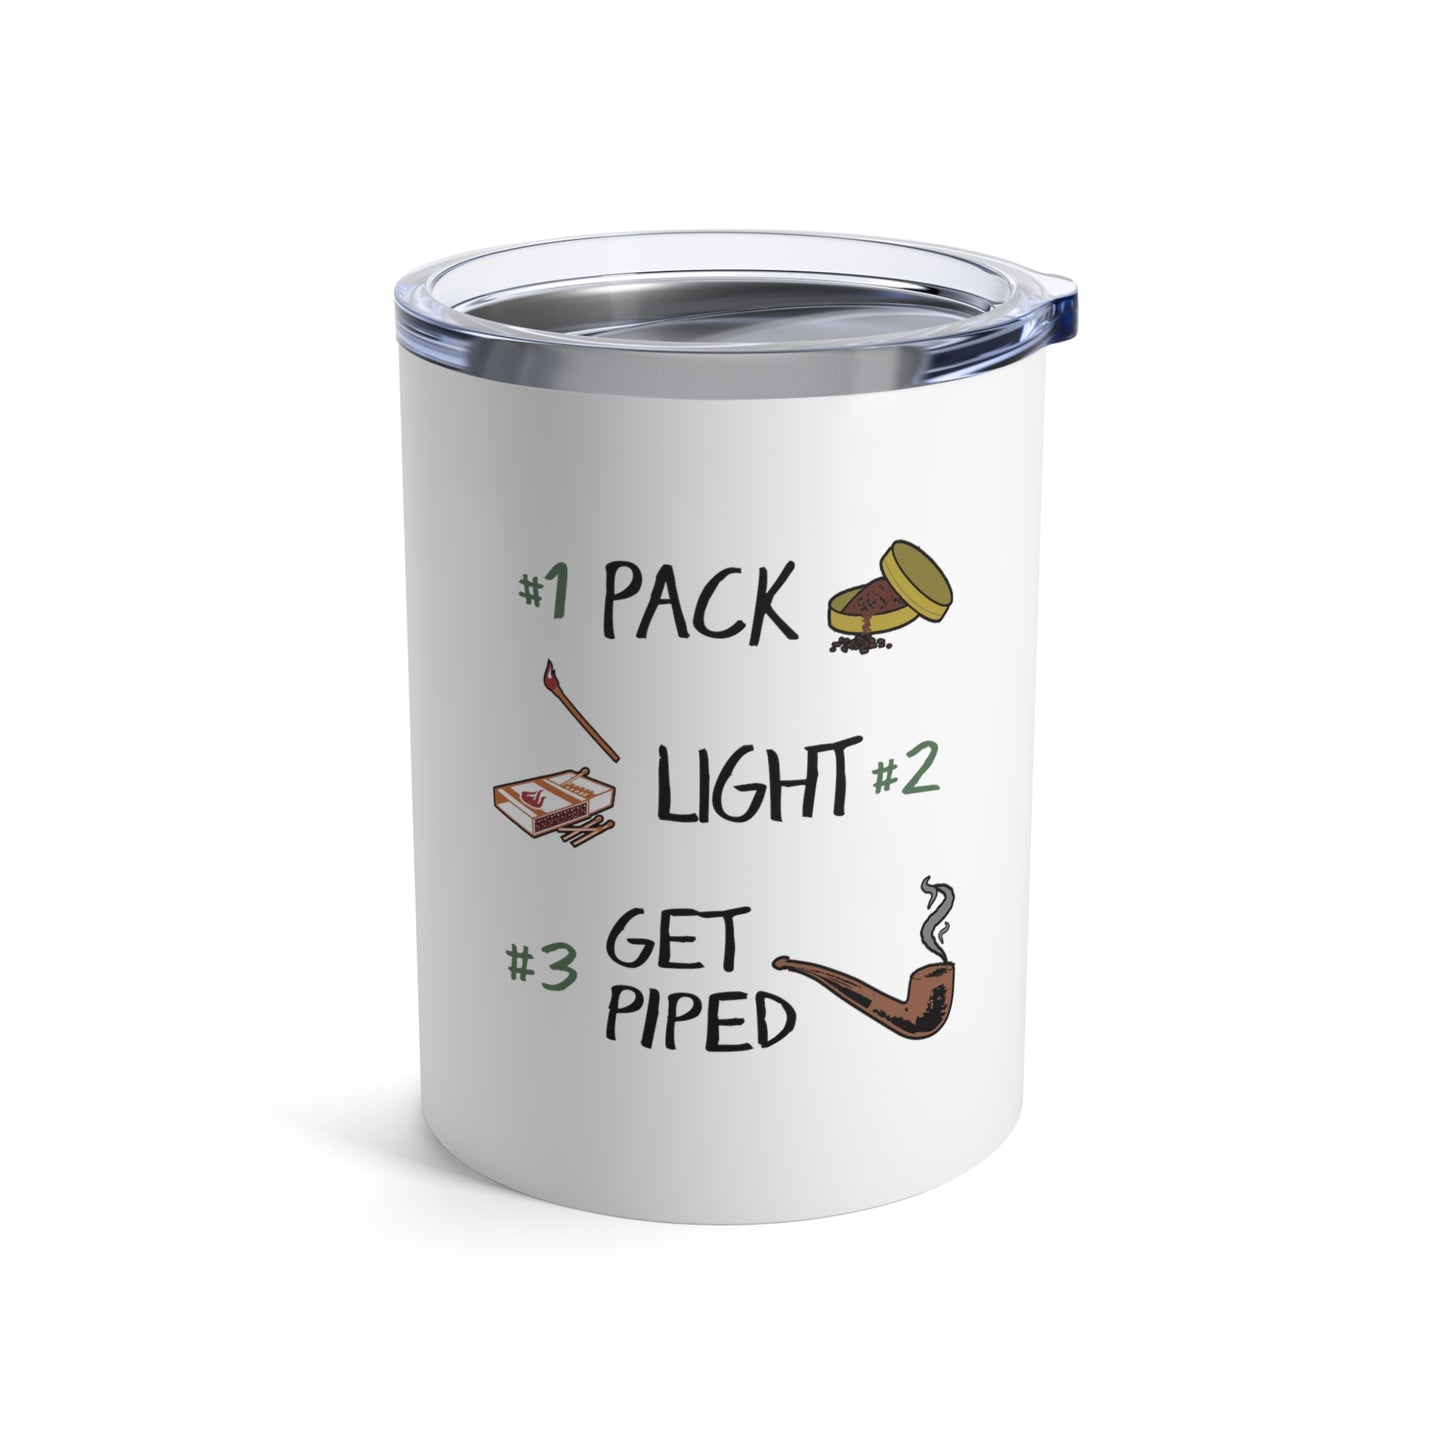 Pack, Light, Get Piped Travel Coffee Mug